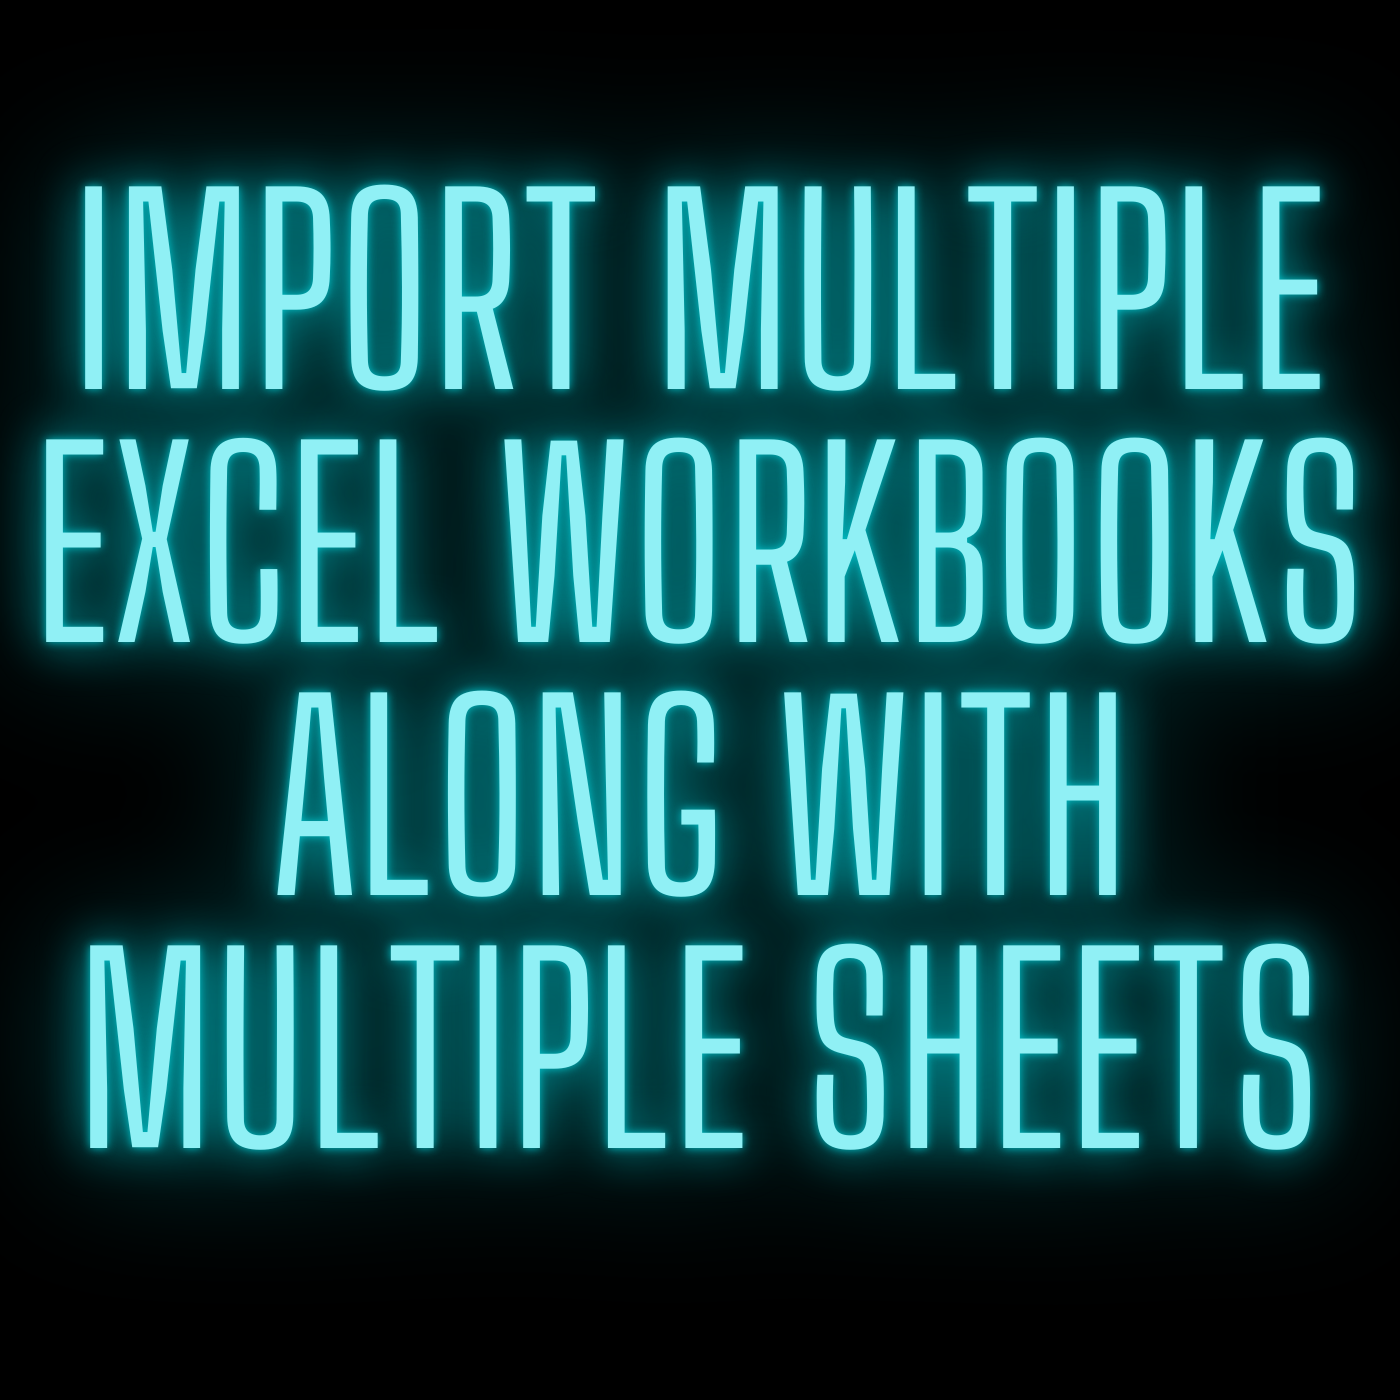 import-multiple-excel-workbooks-multiple-sheets-alteryx-community